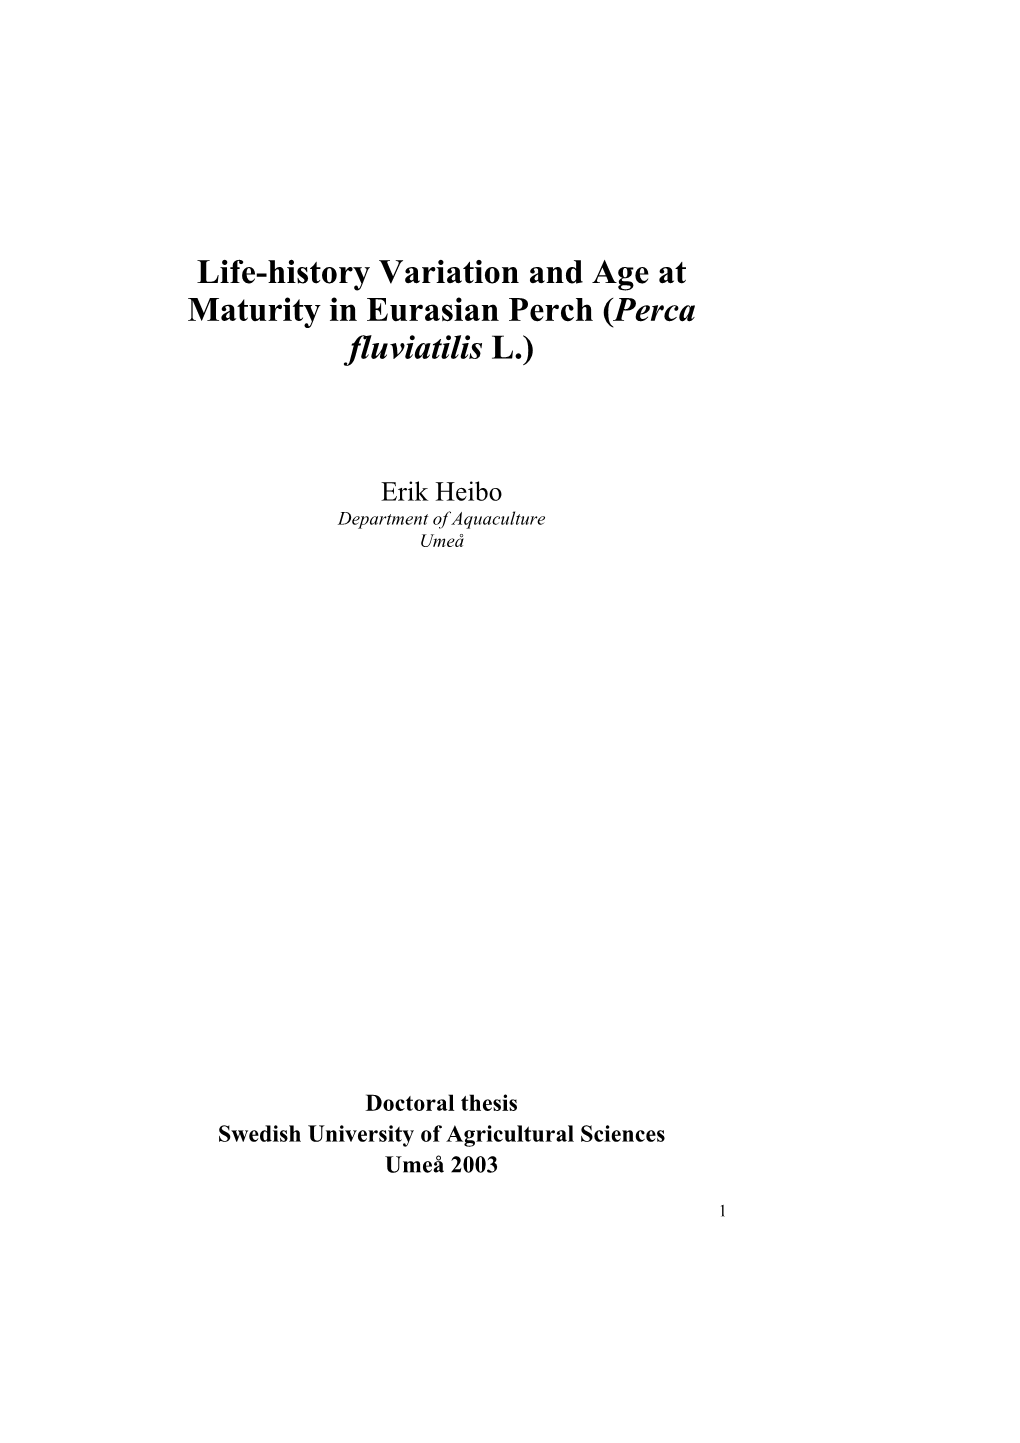 Life-History Variation and Age at Maturity in Eurasian Perch (Perca Fluviatilis L.)